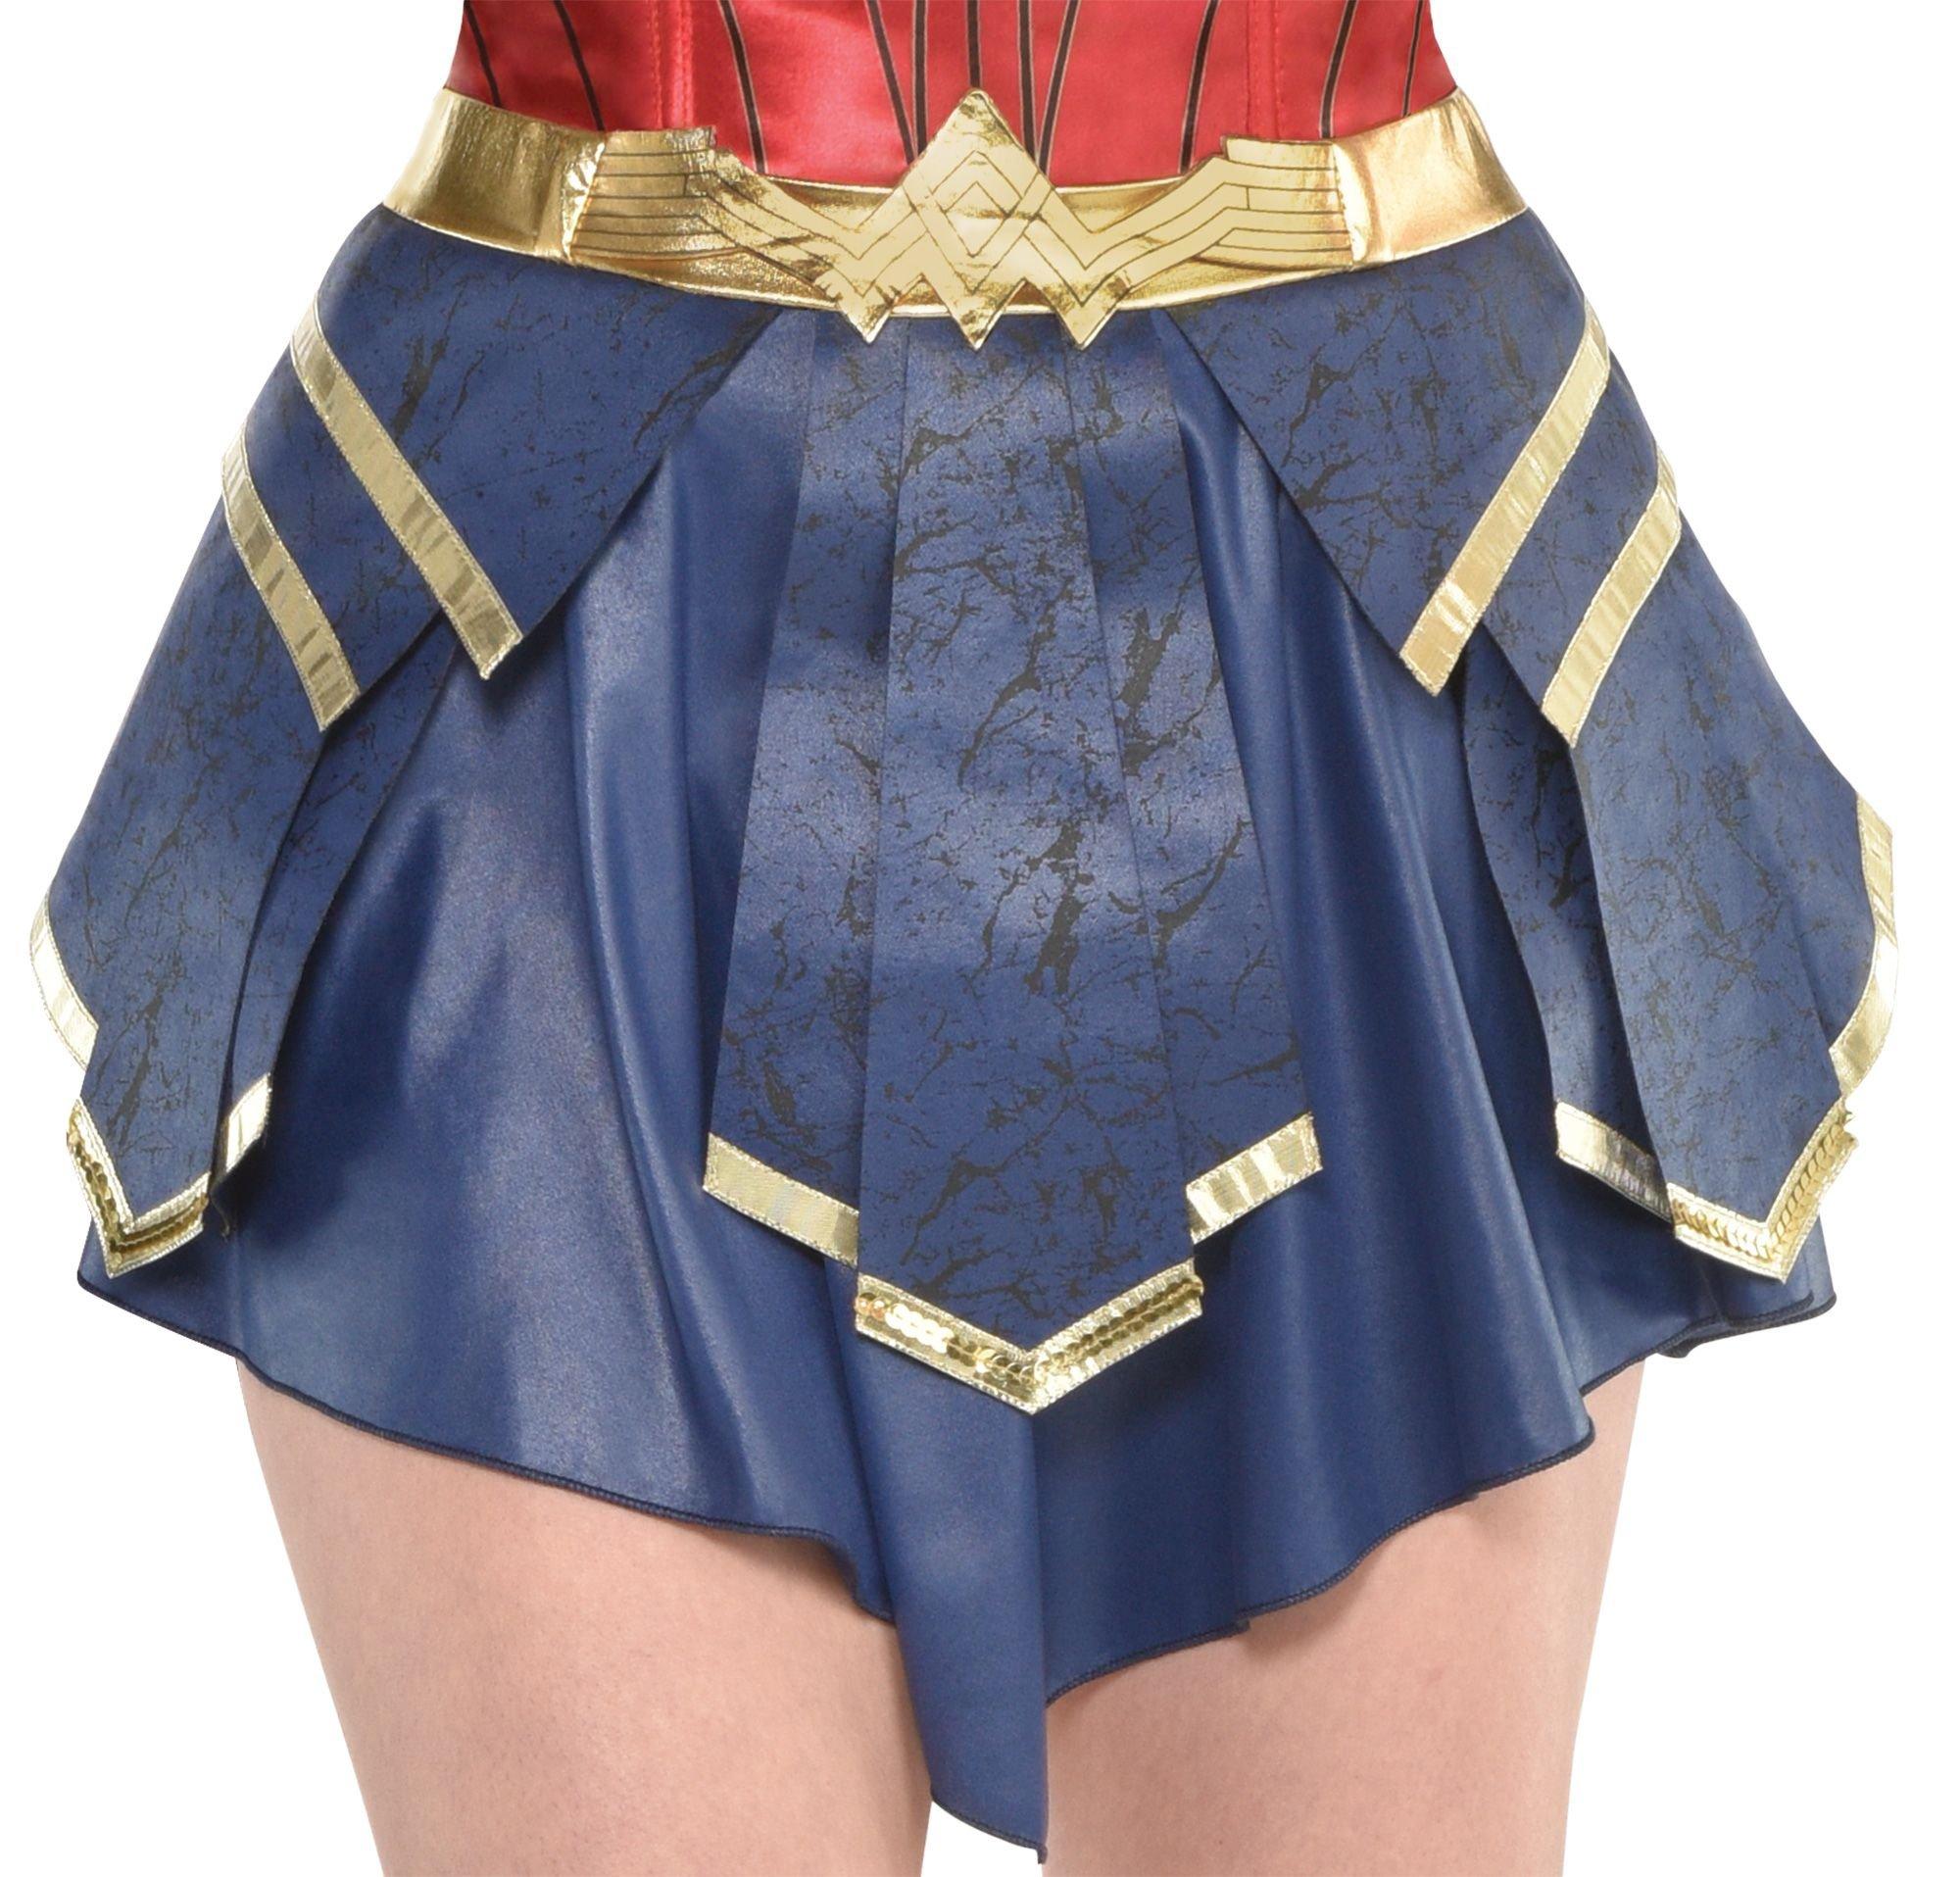 Adult Wonder Woman Skirt